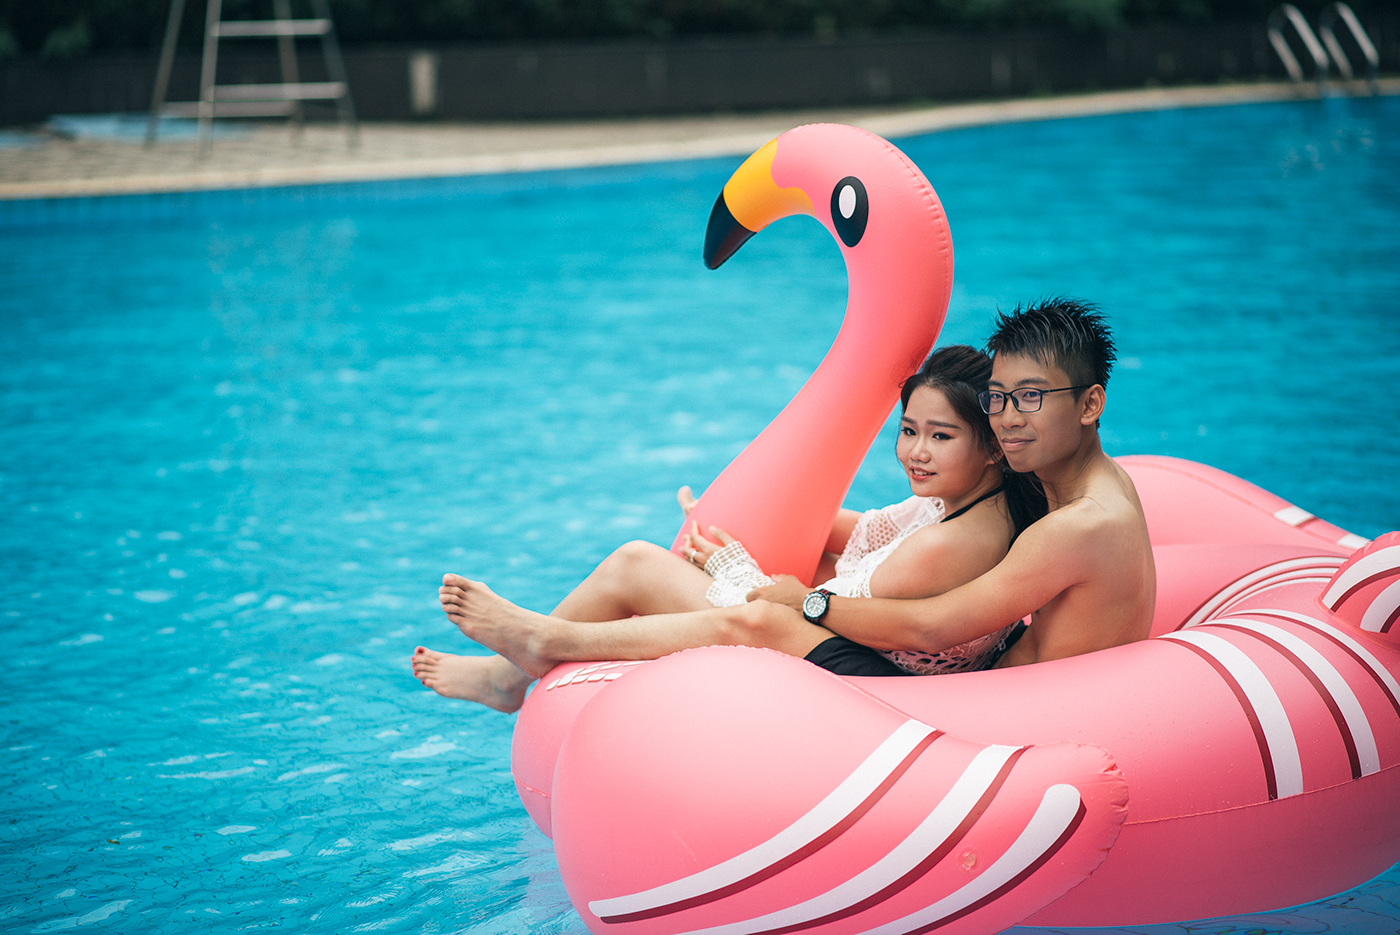 swimming Pool party couples Lovers flamingos pink bikini